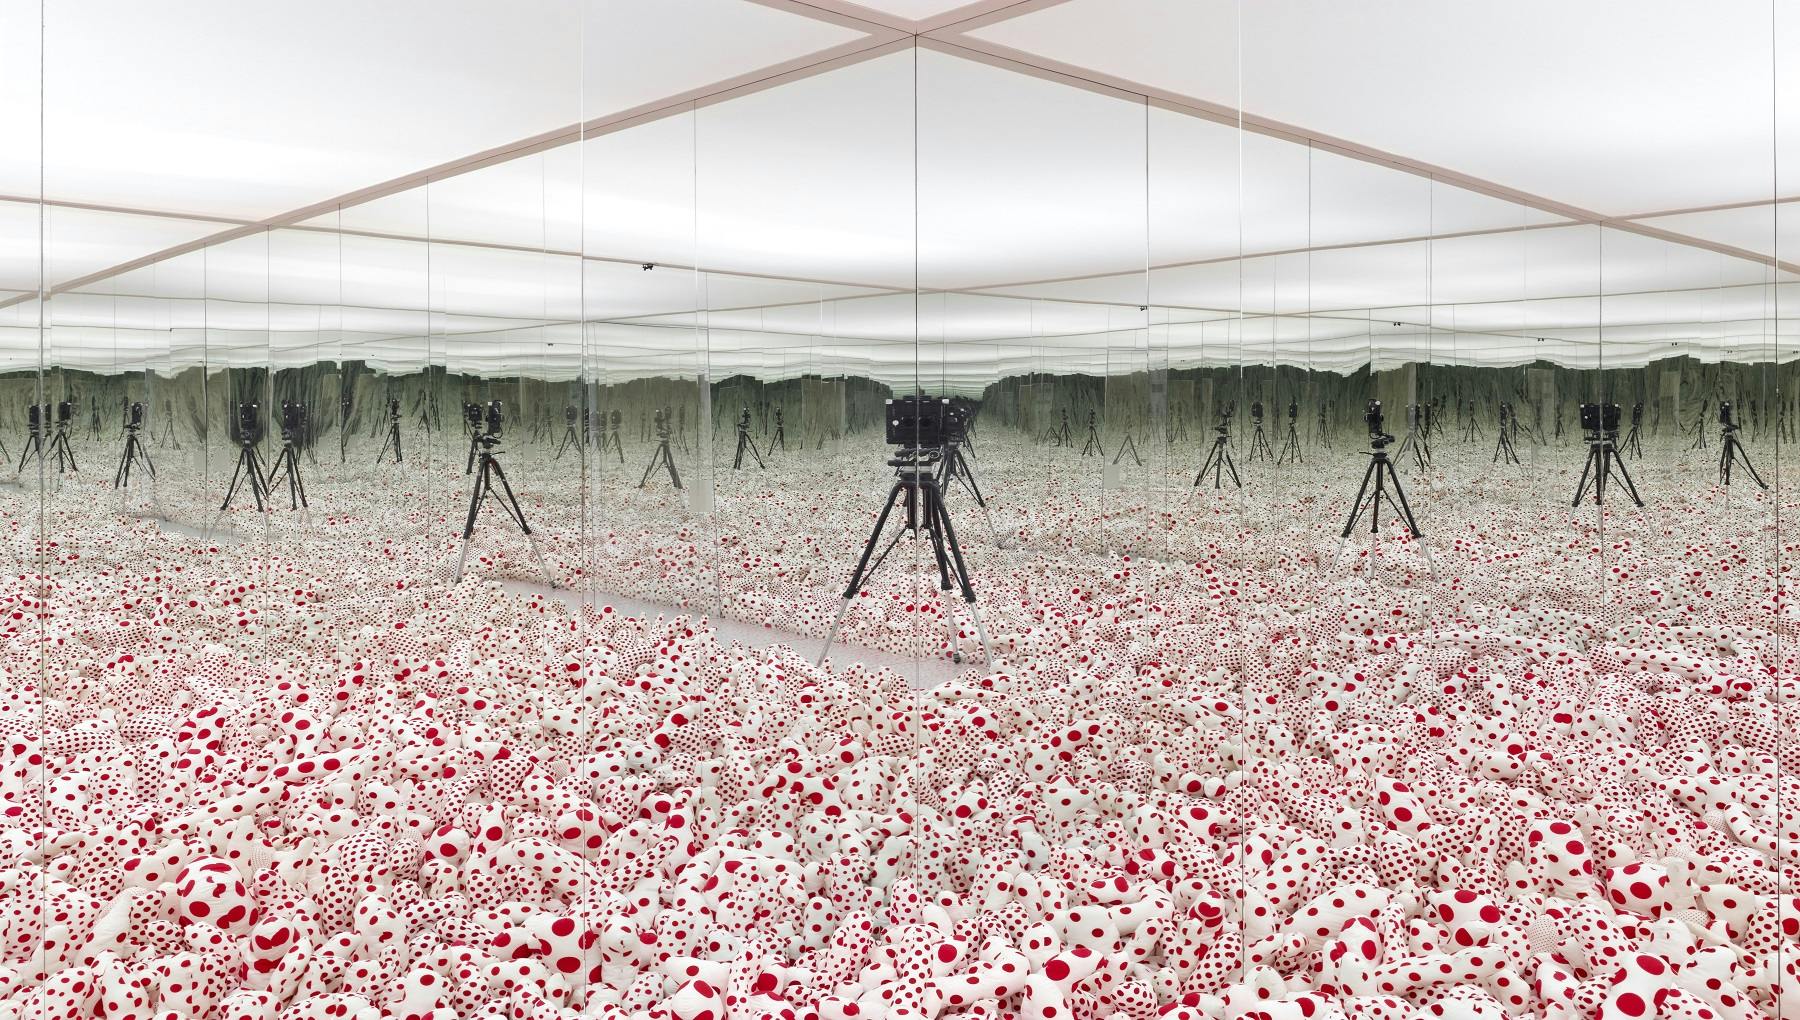 Yayoi Kusama, Infinity Mirror Room - Phalli's Field (Floor Show), 1965/1998.